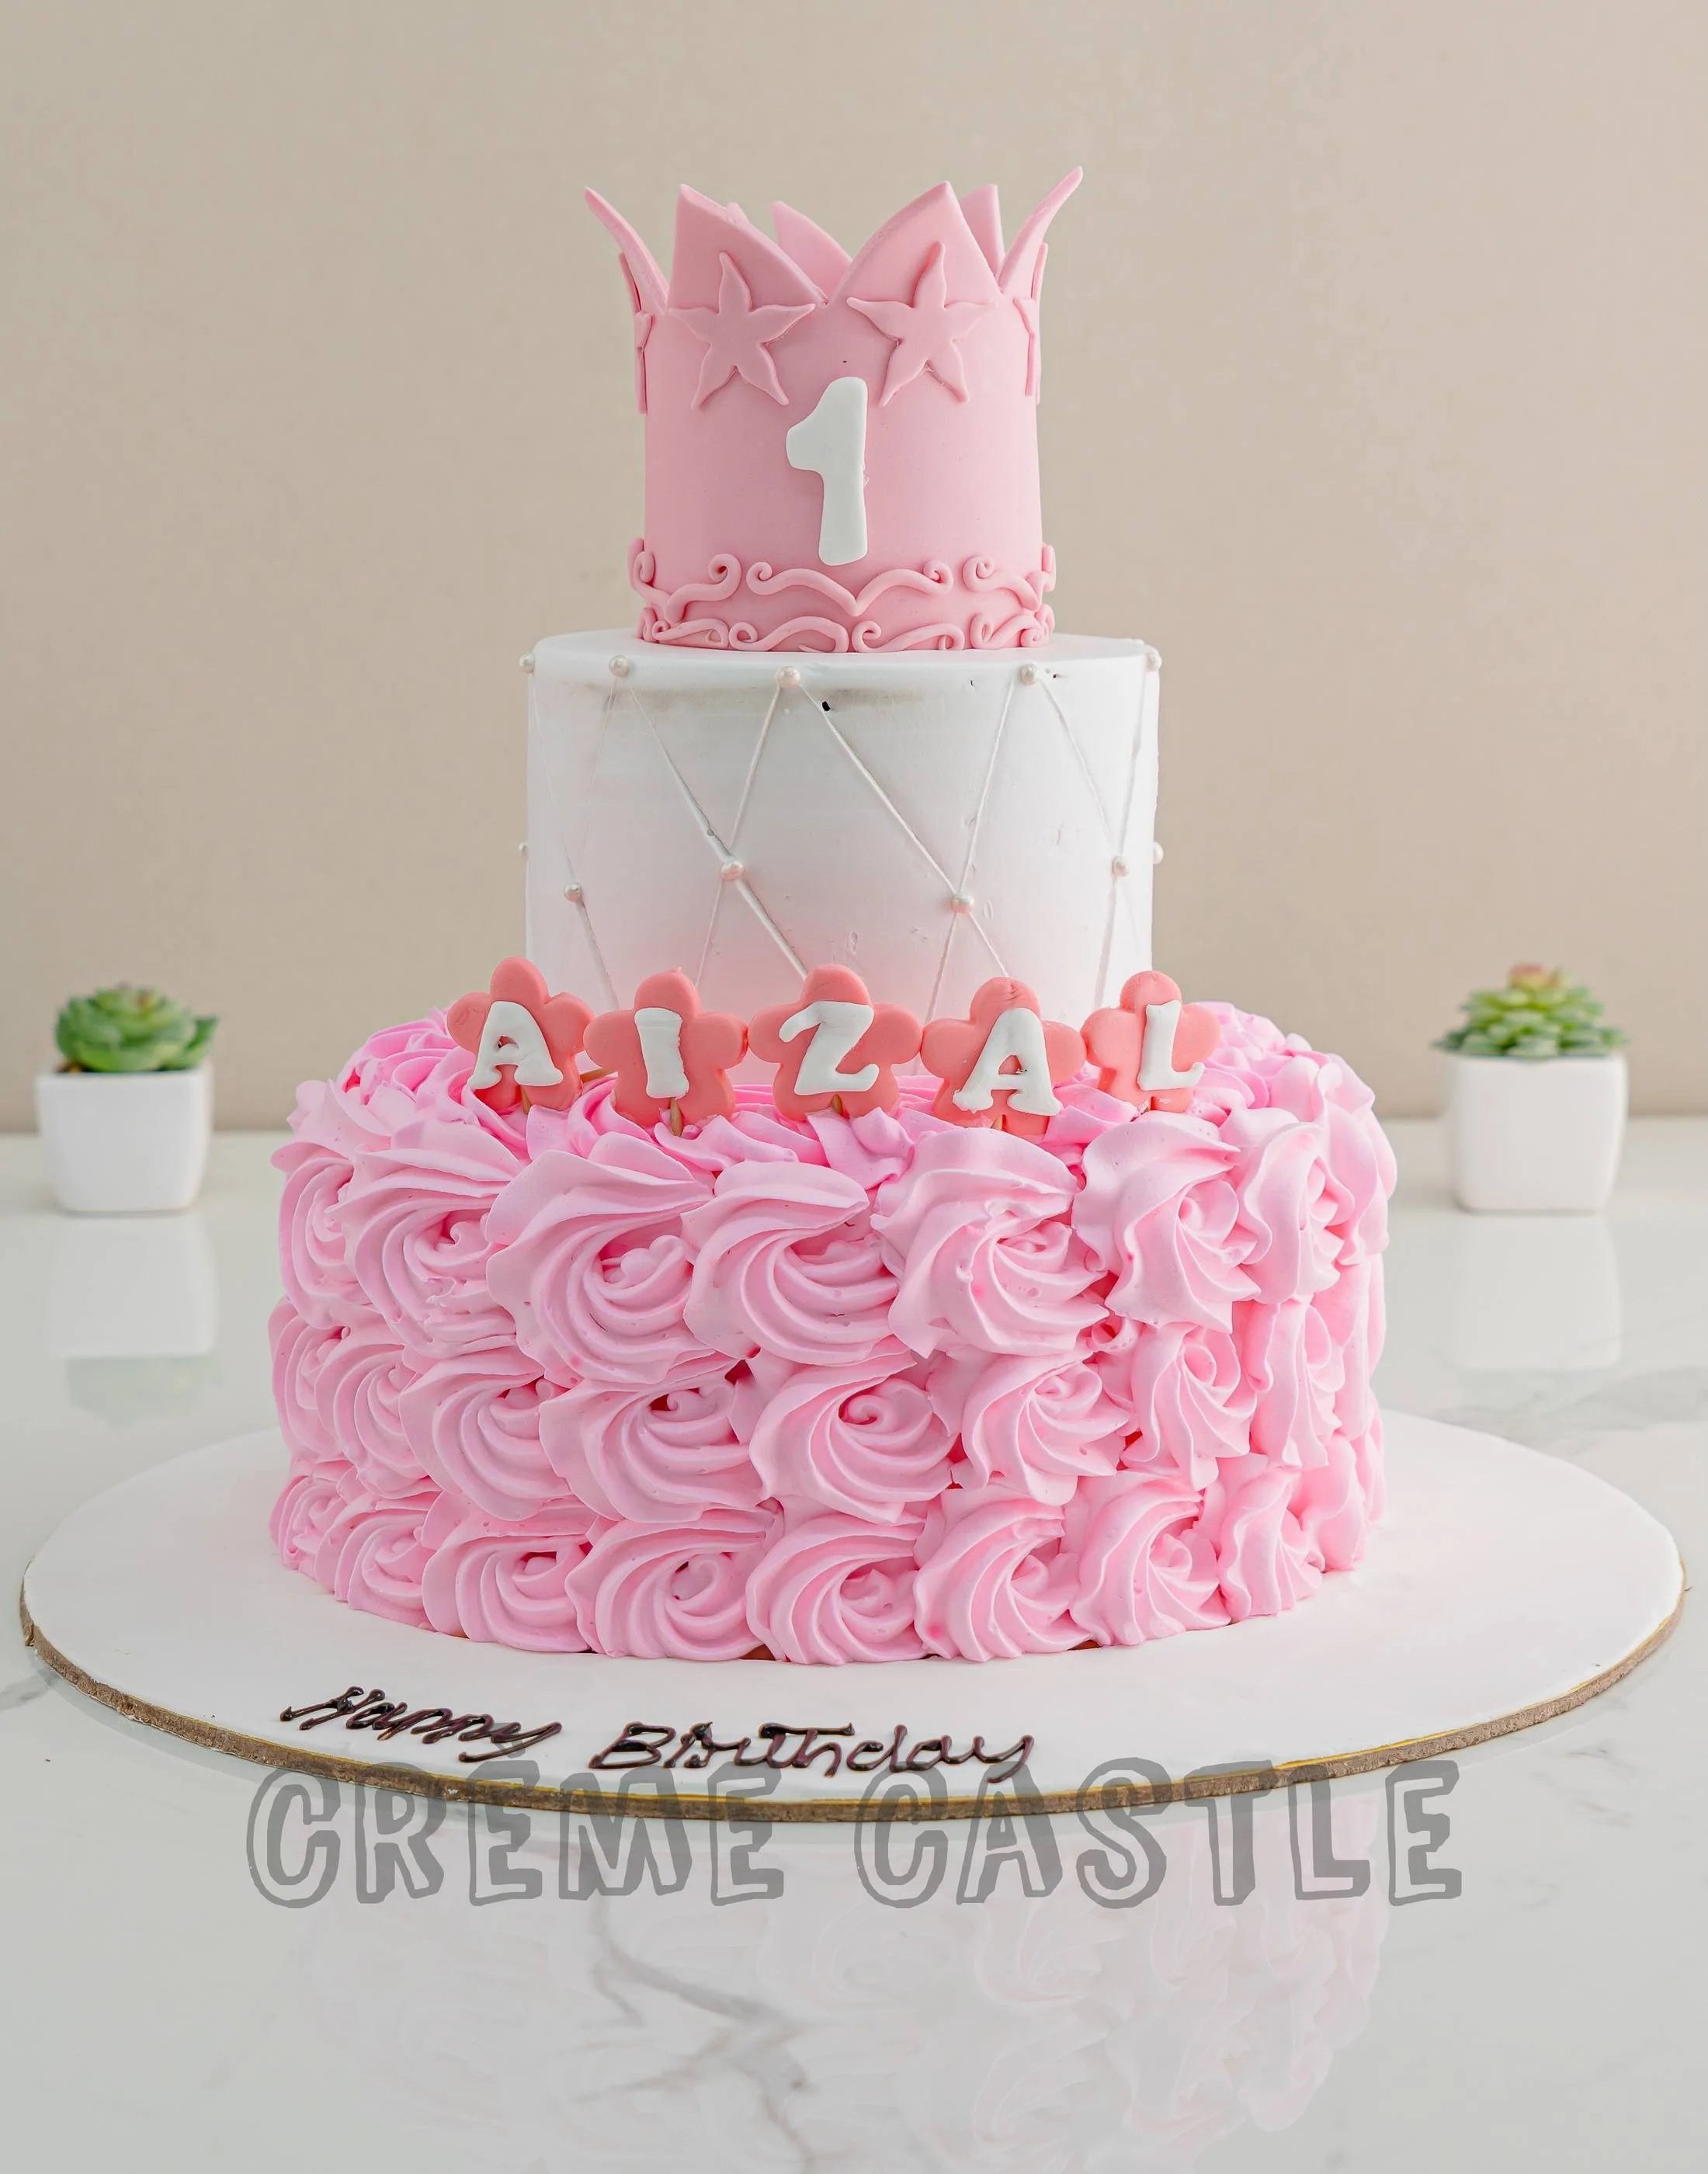 Buy Anniversary Cake Online in Indore at Best Price | Happy anniversary  cakes, Anniversary cake designs, Anniversary cake